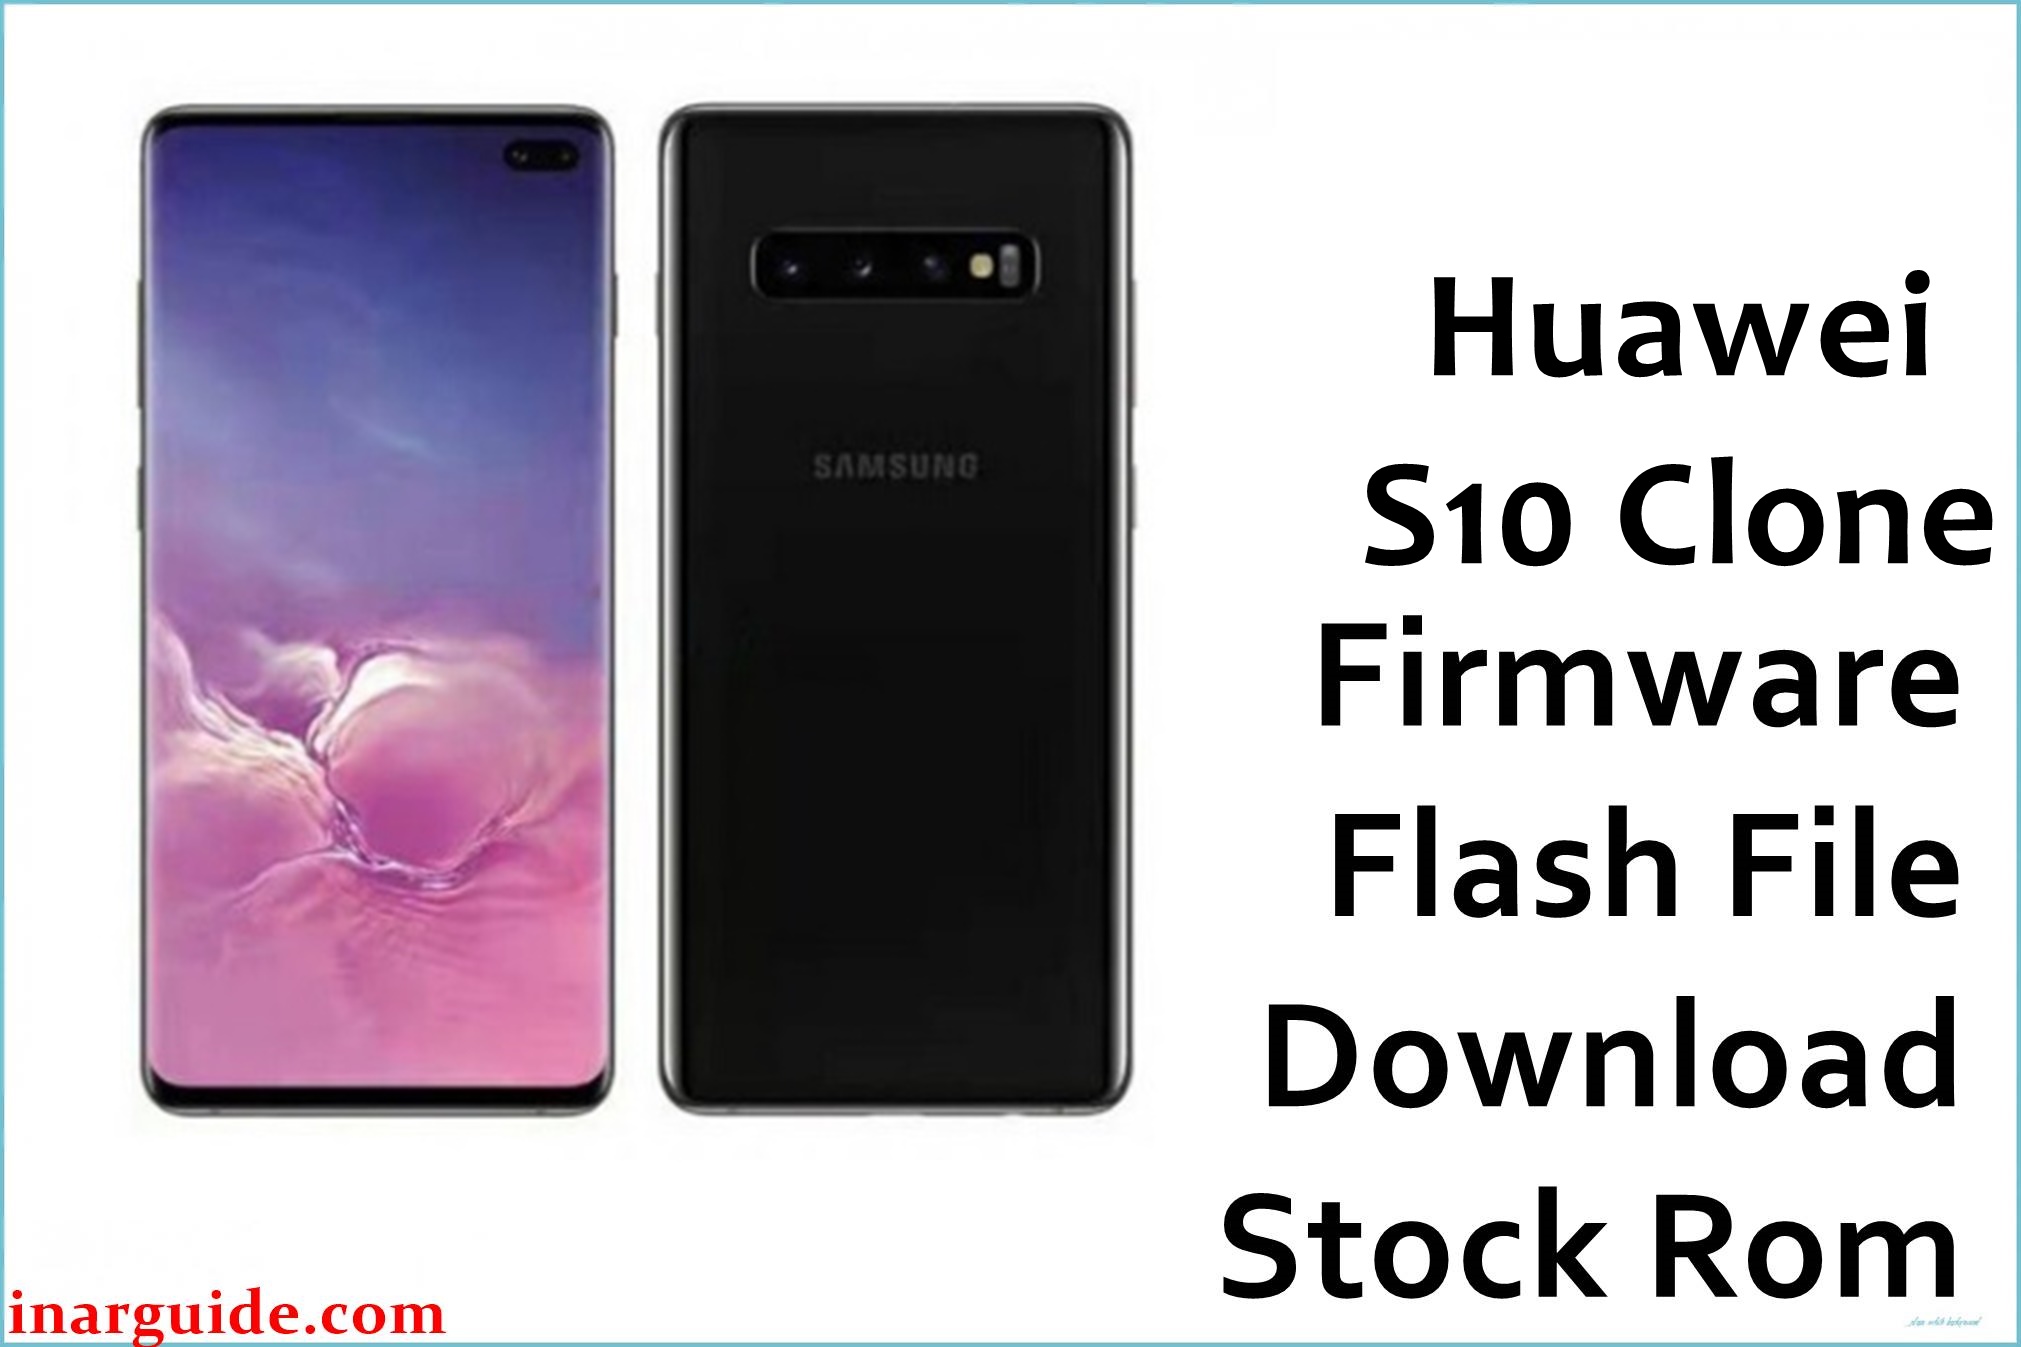 Huawei S10 Clone